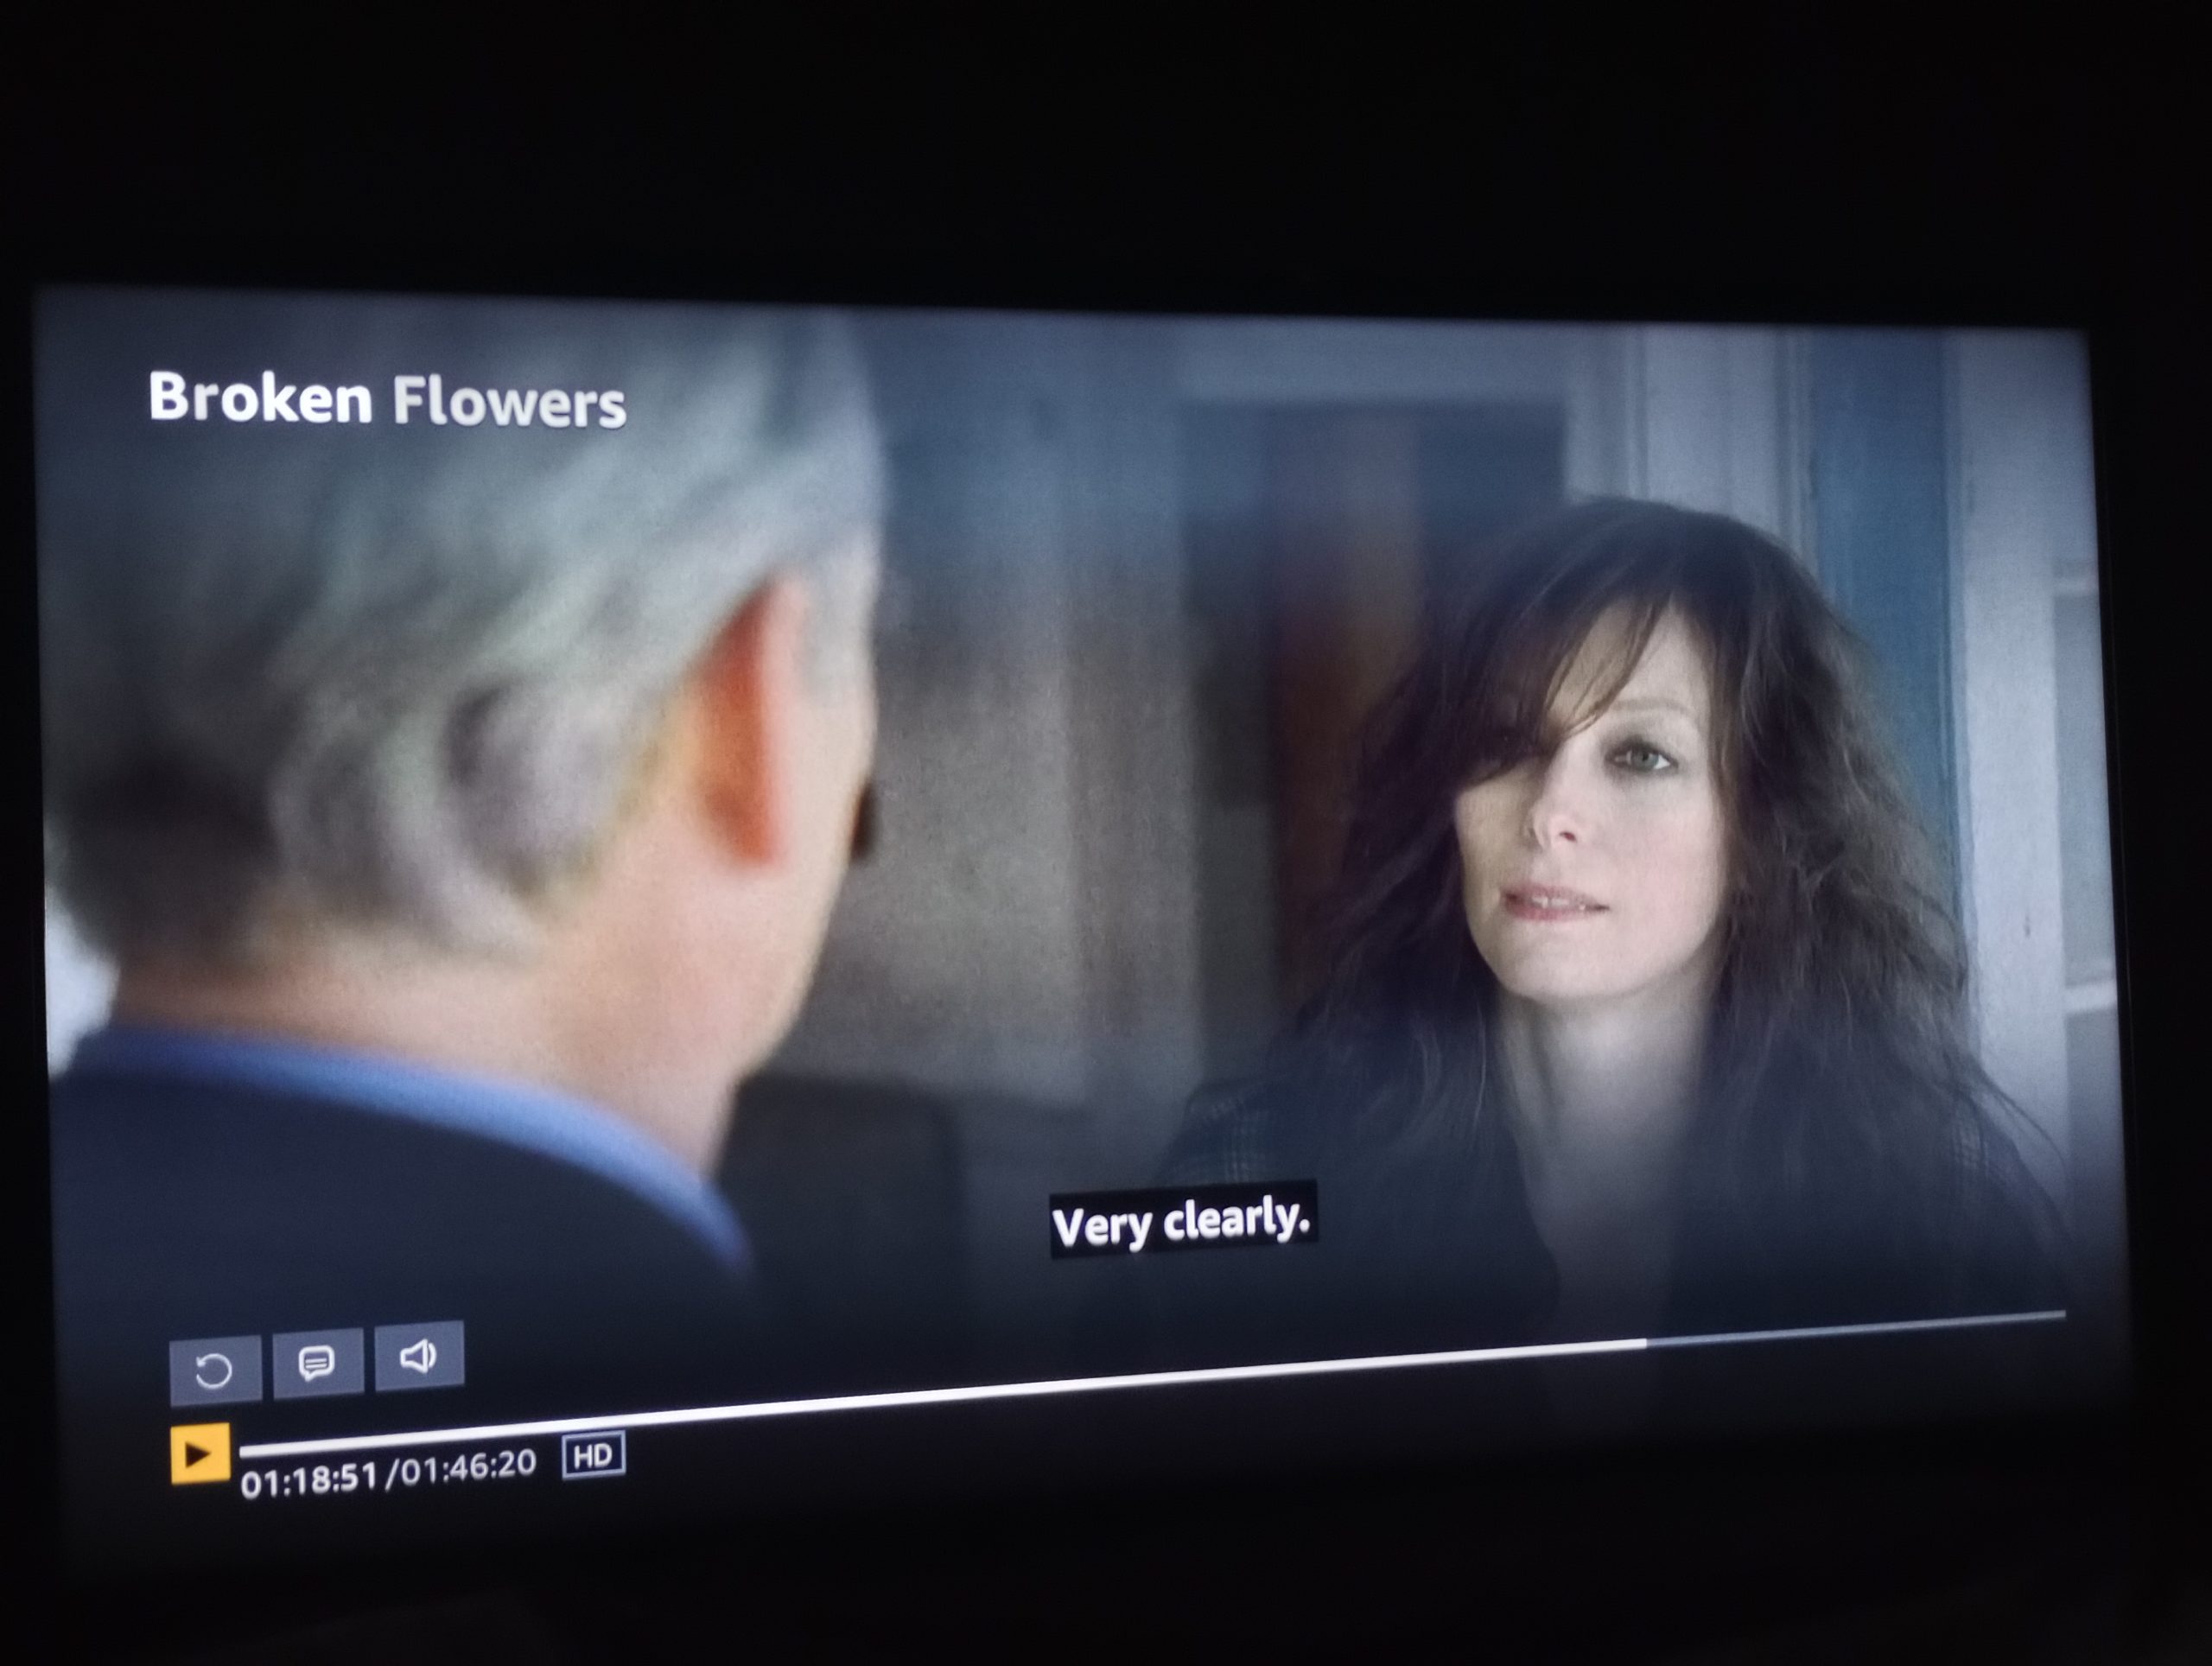 Broken Flowers scene showing Penny in doorway saying "Very clearly"